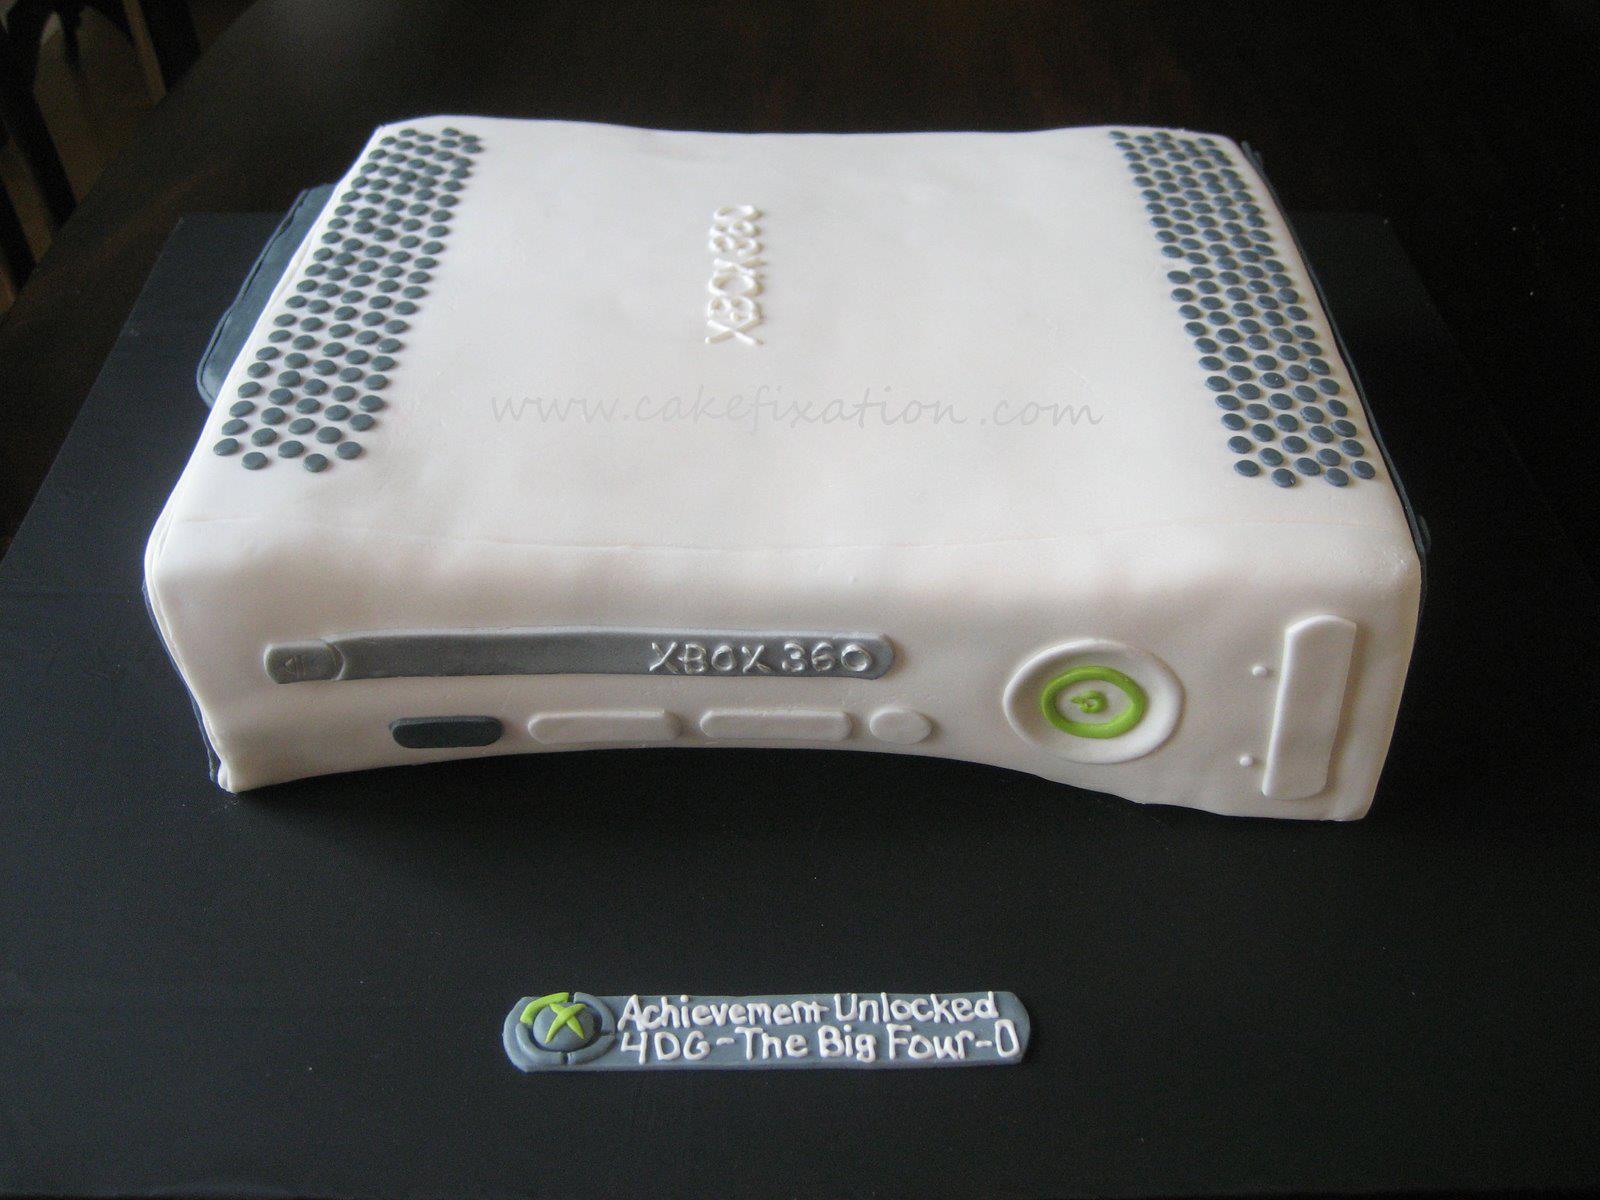 How to Make Xbox Cake